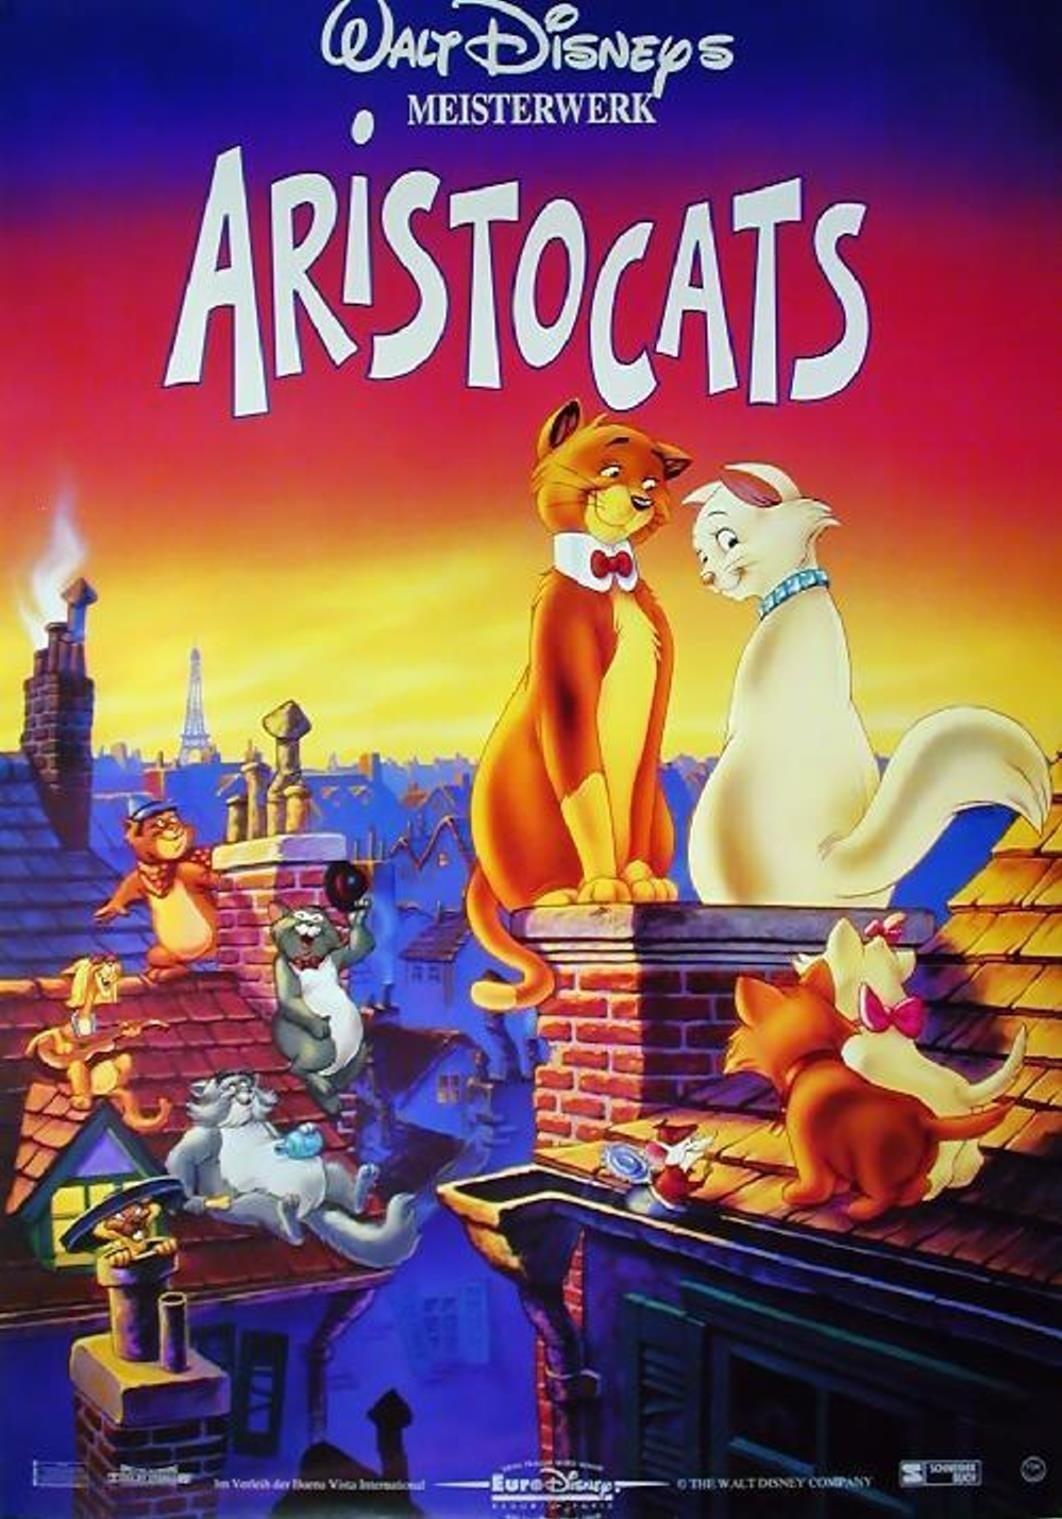 Aristocats poster